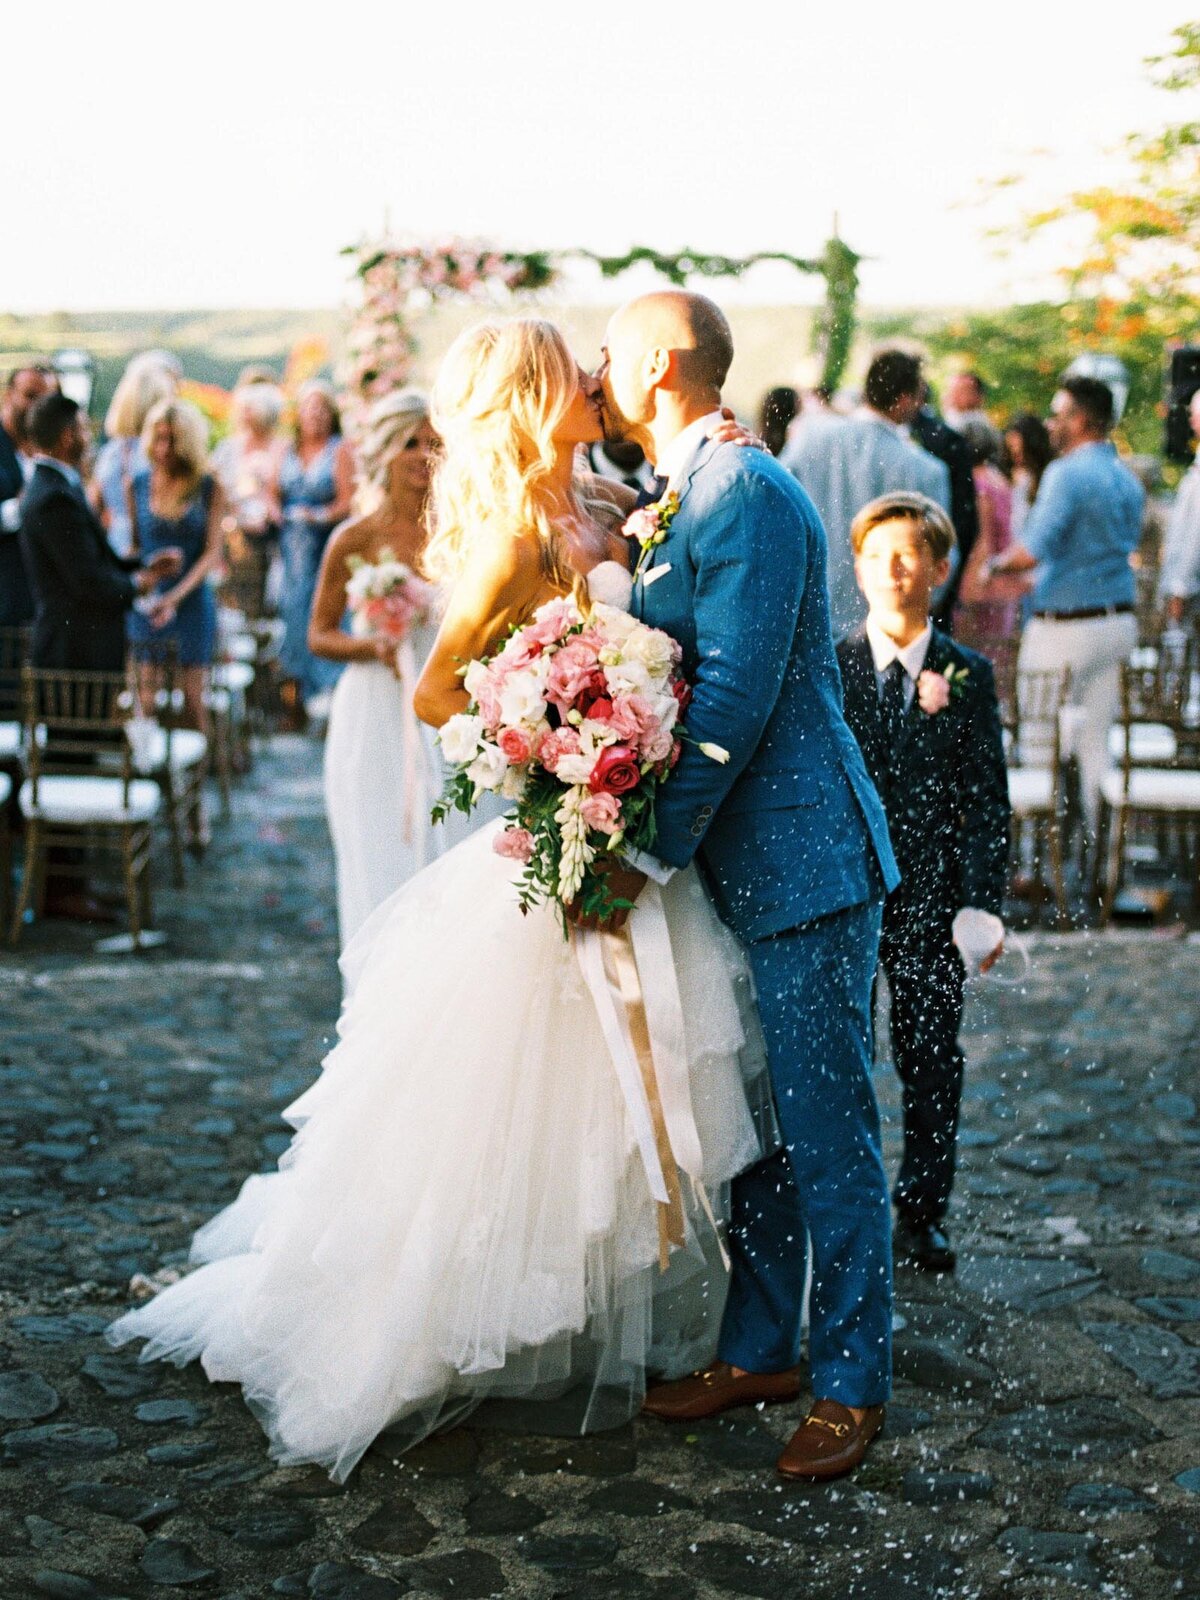 Couple kissing at a beach destination wedding